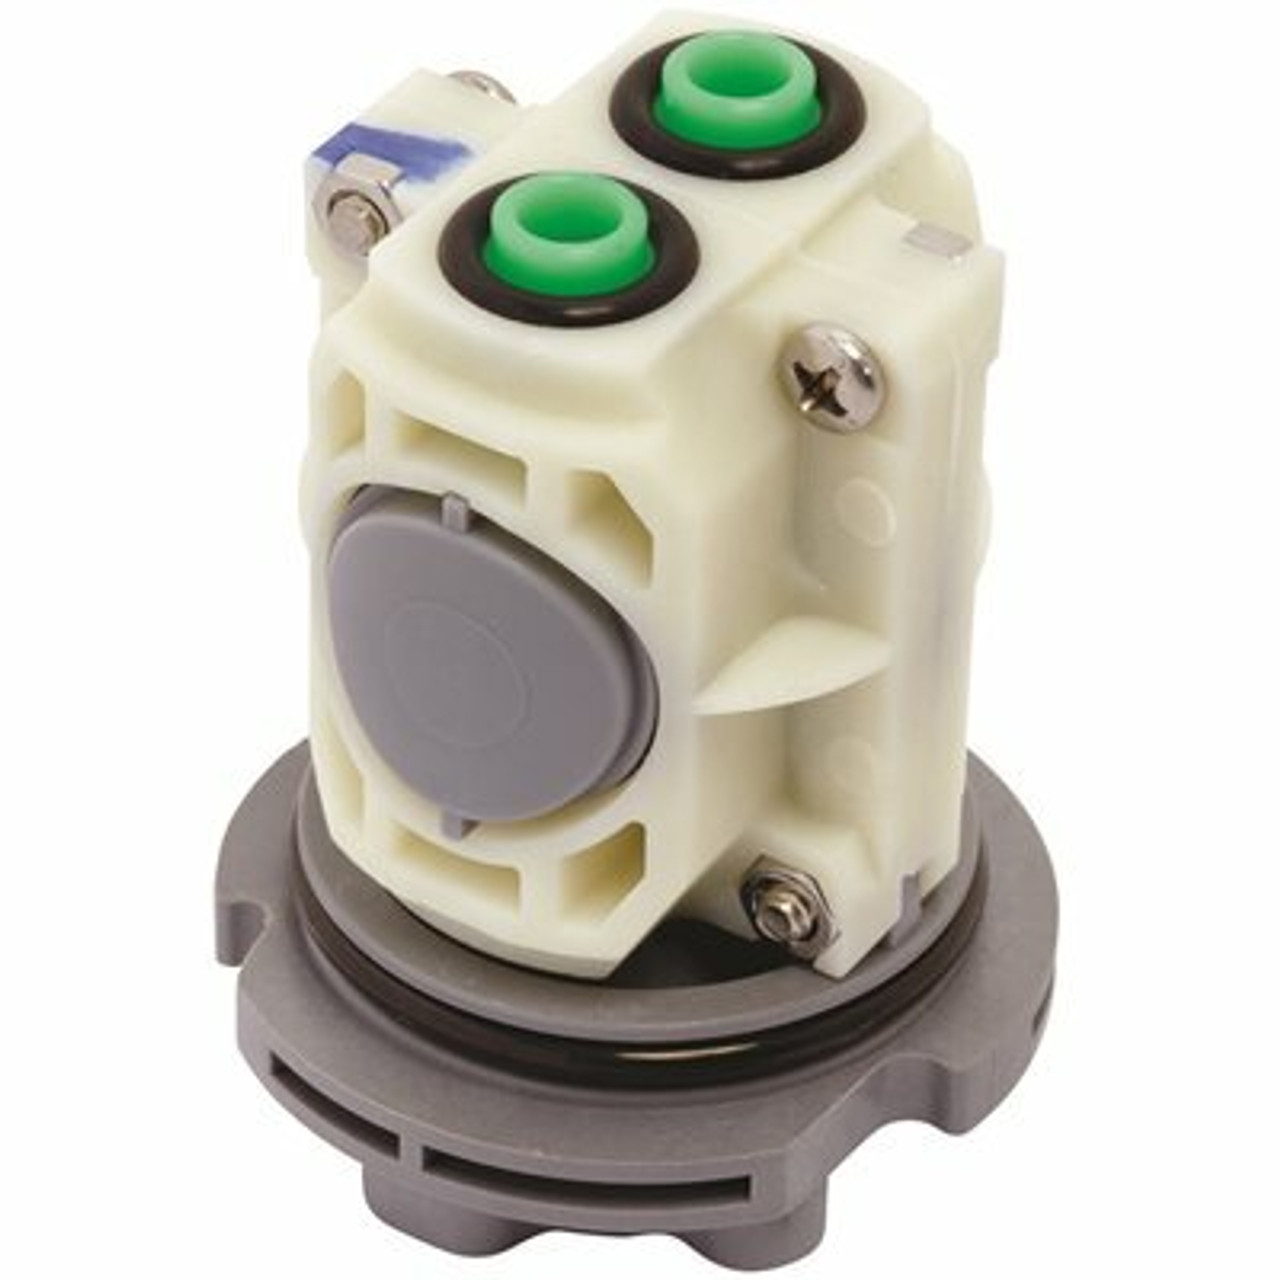 American Standard Pressure Balance Unit For Single-Control Tub/Shower Valve